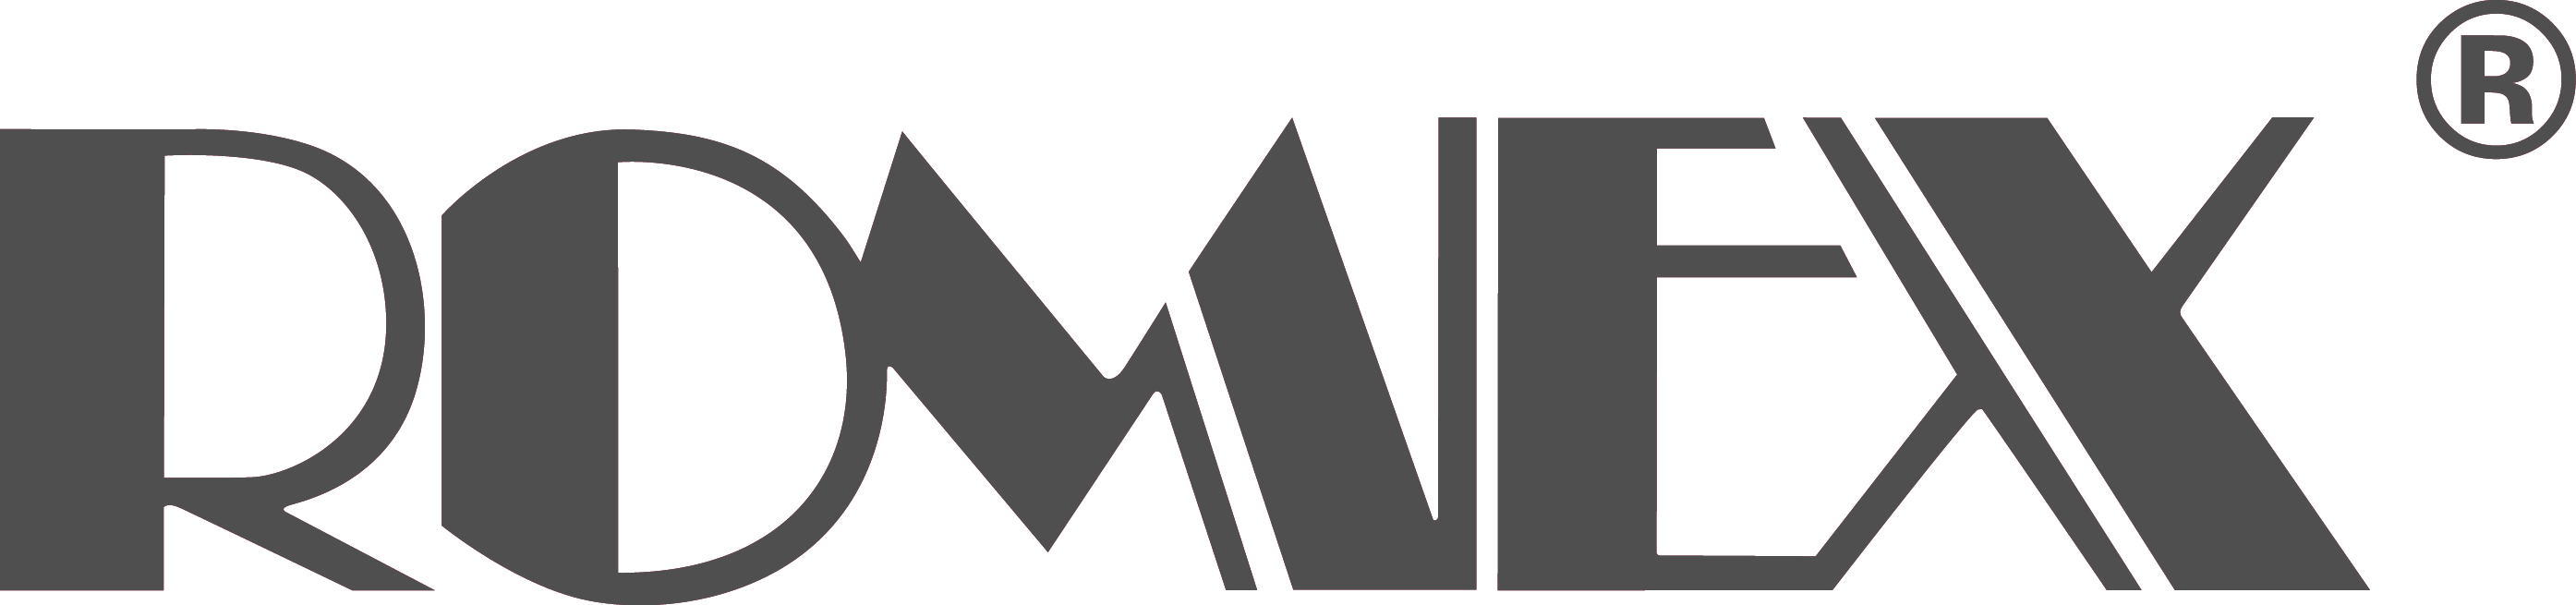 Logo_002